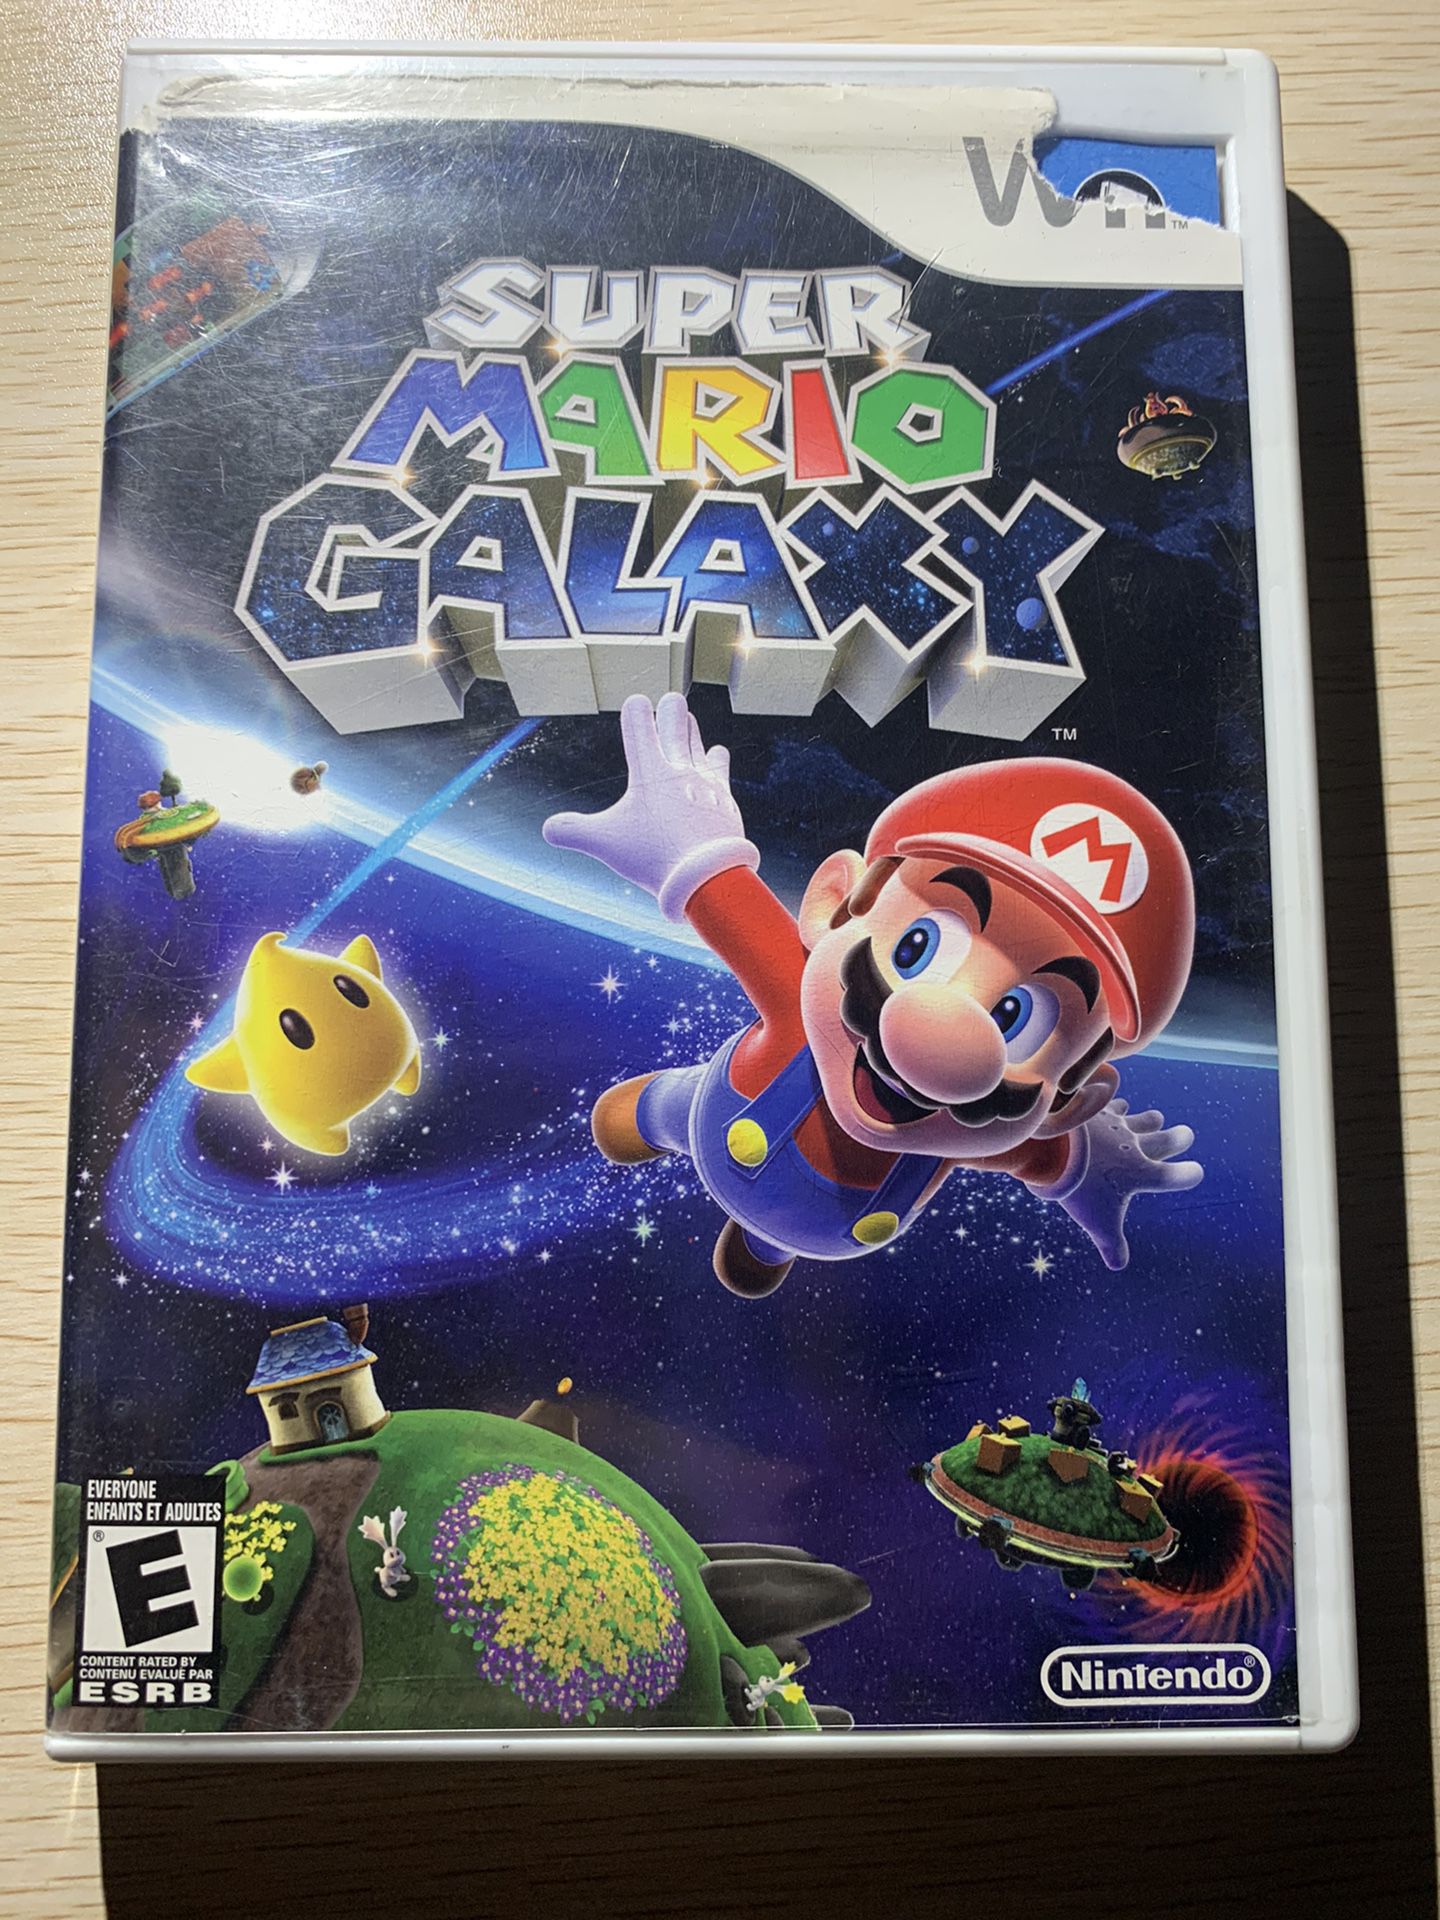 Nintendo Wii Super Mario Galaxy Complete Works Great.